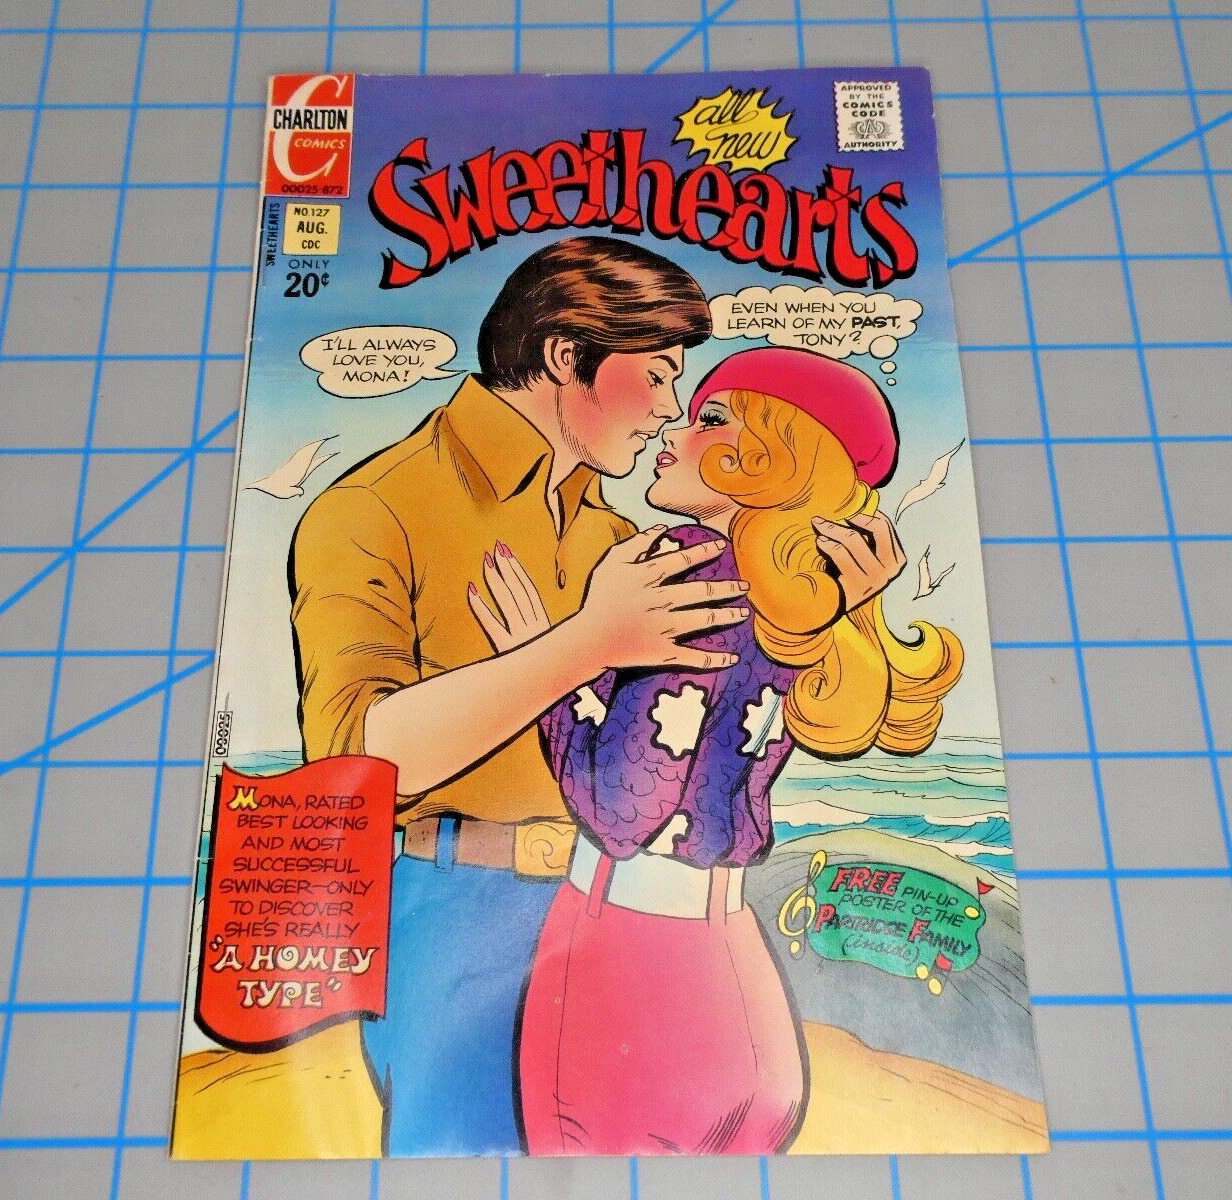 Sweethearts Vol. 5 No. 127 August 1972 Charlton Comics